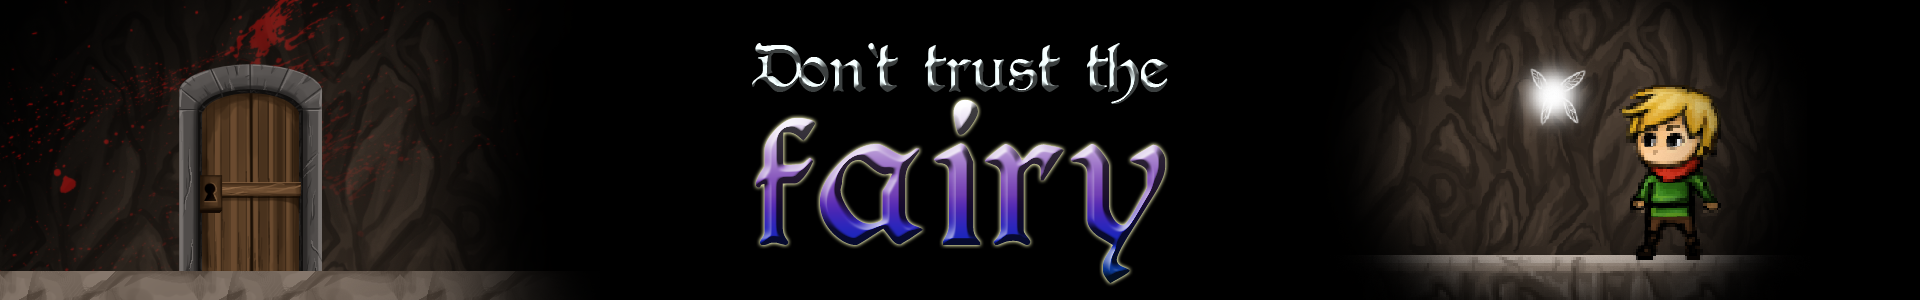 Don't trust the Fairy